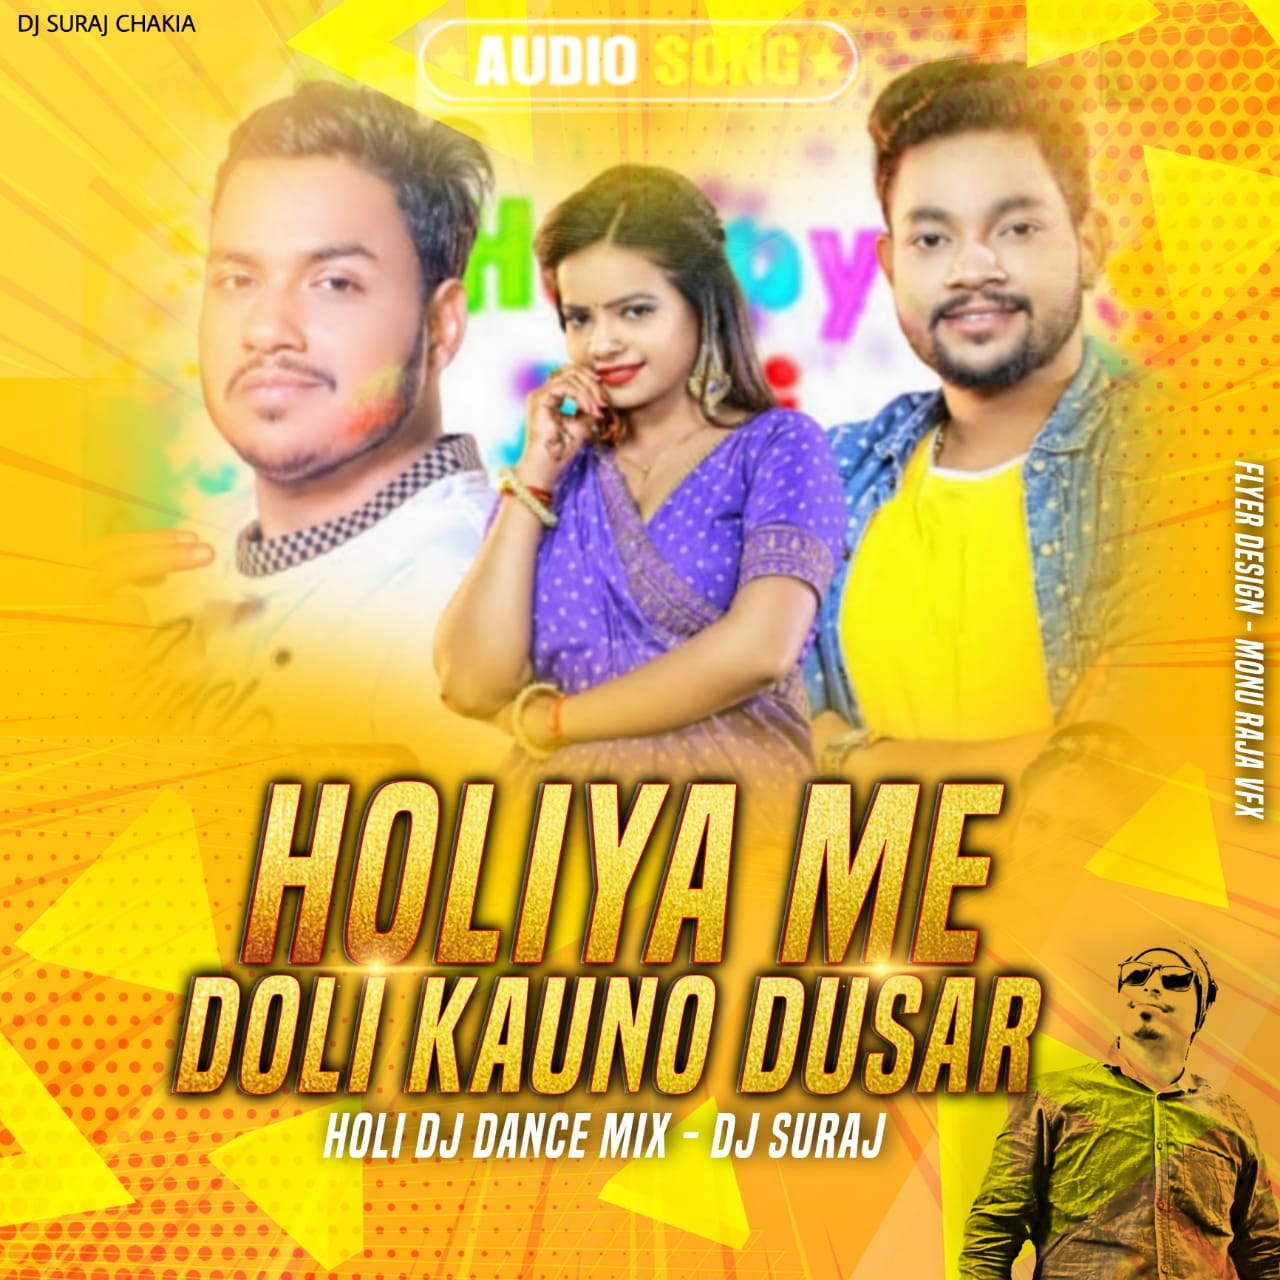 Holi Me Me Doli Kauno Dusar Leke Jai - Ankush Raja (BhojPuri Holi Electro Bass Dance Remix 2022) - Dj Suraj Chakia